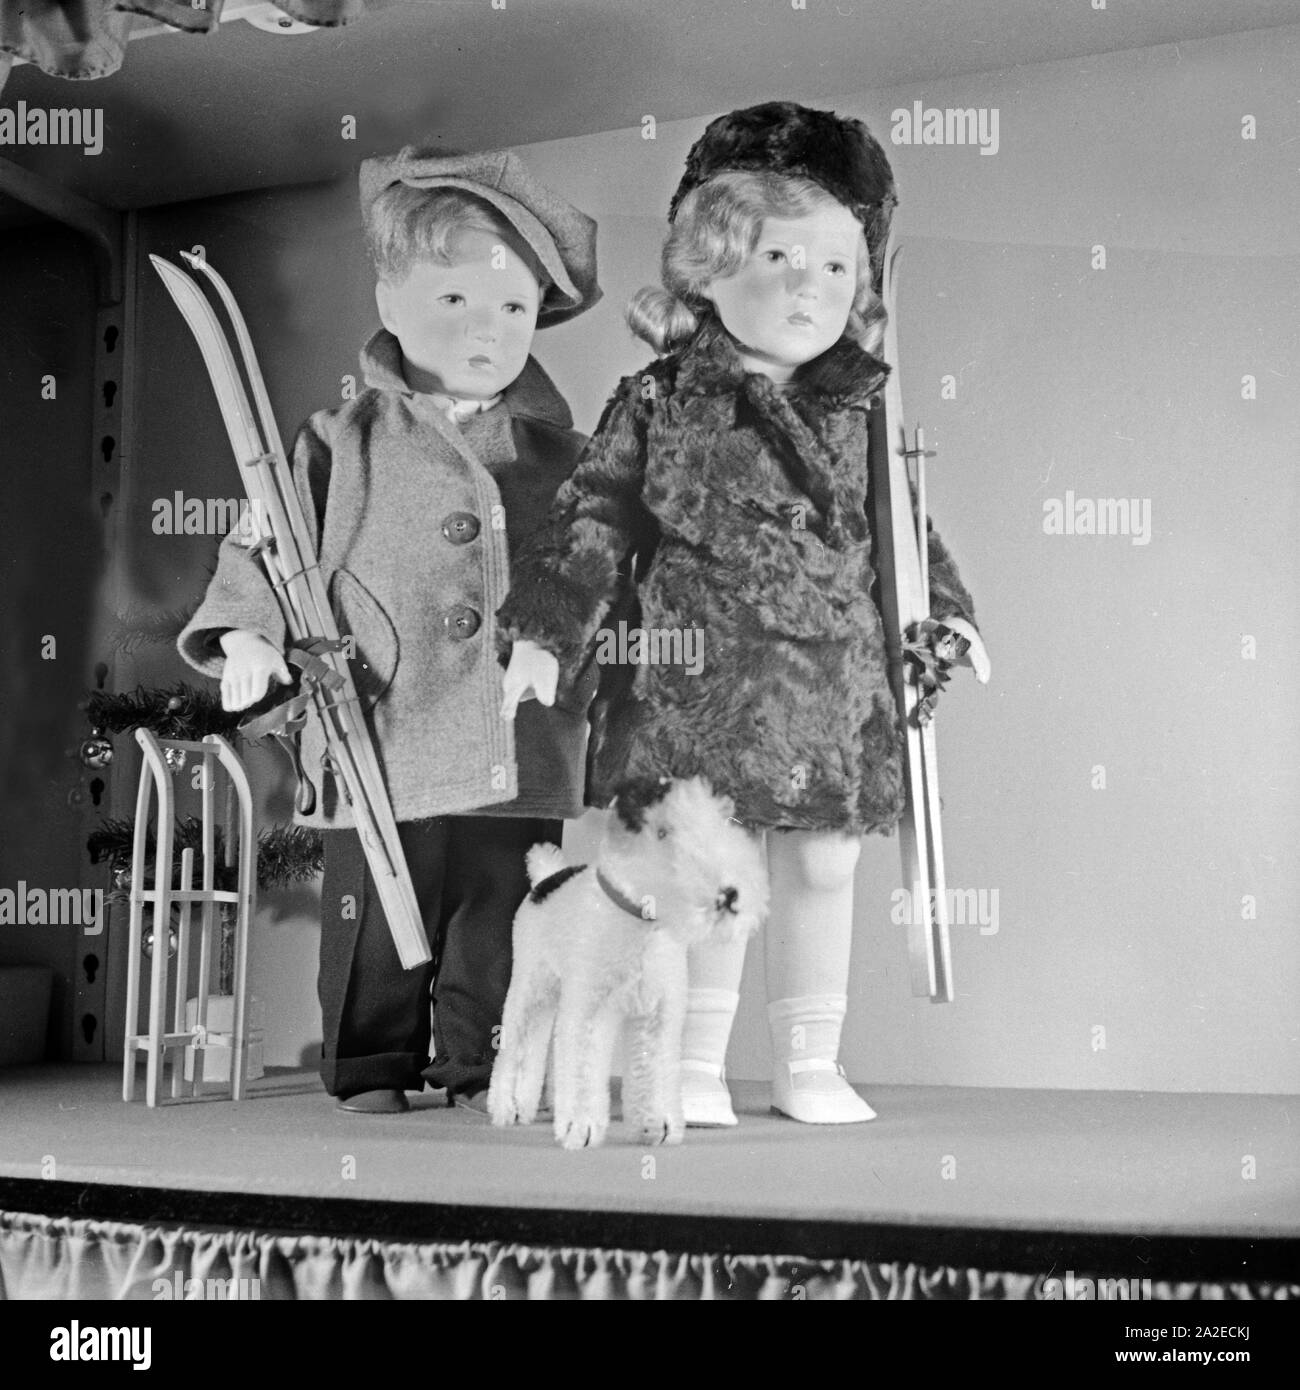 Einige Modelle, hier ien Skiläufer-Paar, der berühmten Kate Kruse Puppen aus Bad Kösen, Deutschland 1930er Jahre. Alcuni campioni del famoso Kaethe Kruse bambole di Bad Koesen, Germania 1930s. Foto Stock